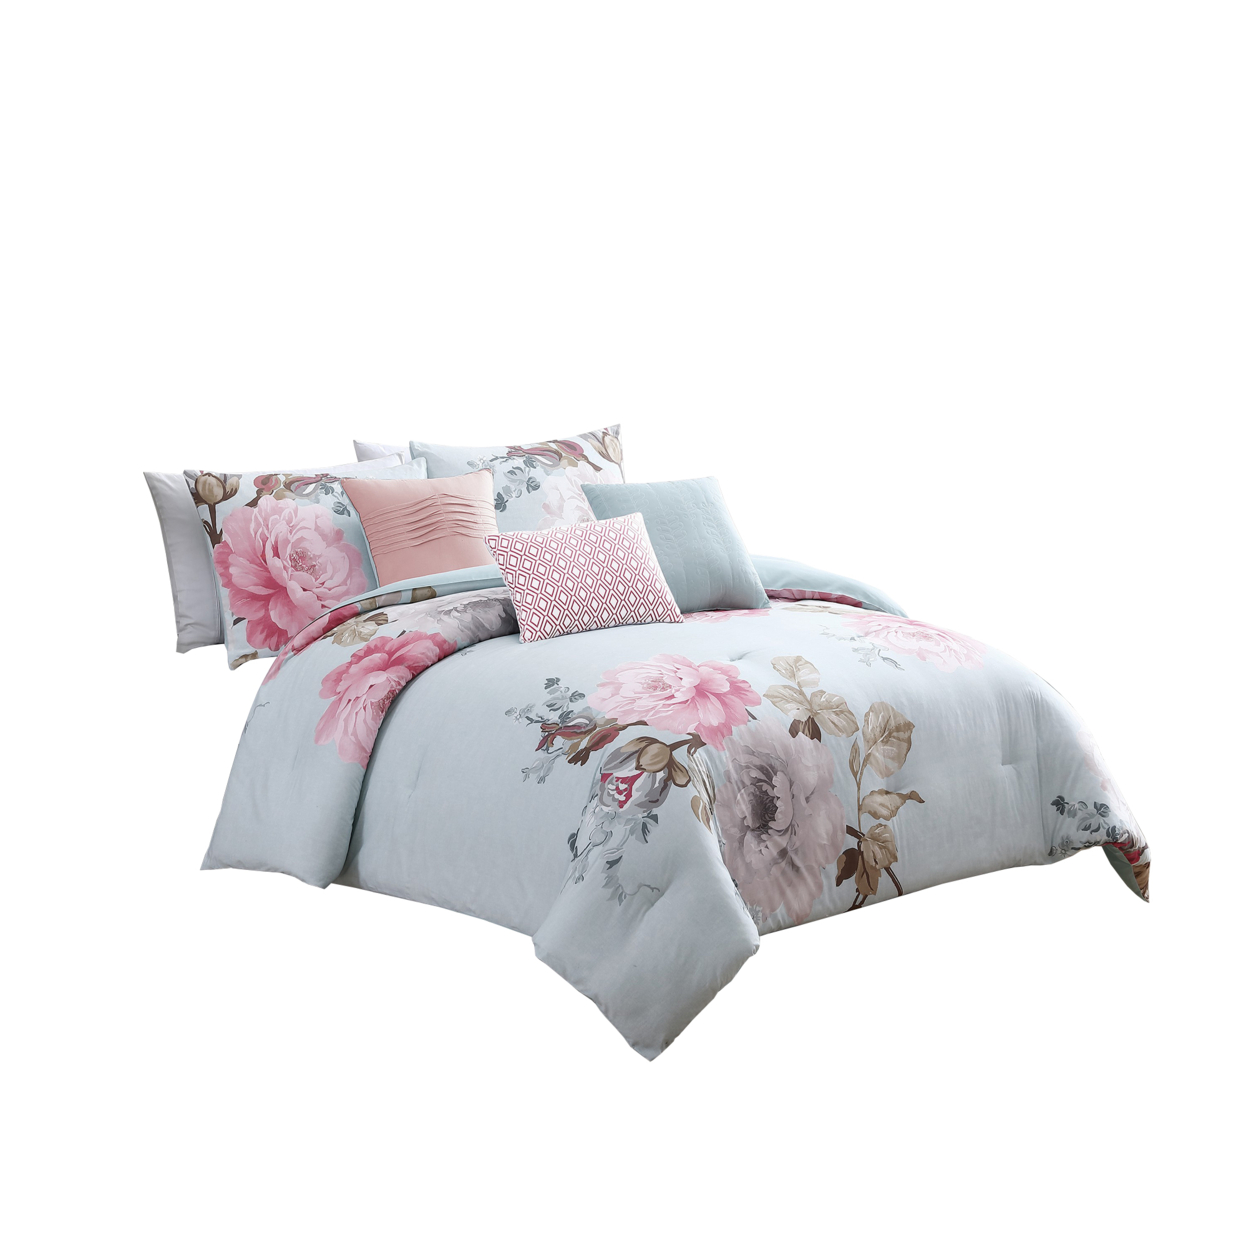 Queen Size 7 Piece Fabric Comforter Set With Floral Prints, Multicolor- Saltoro Sherpi